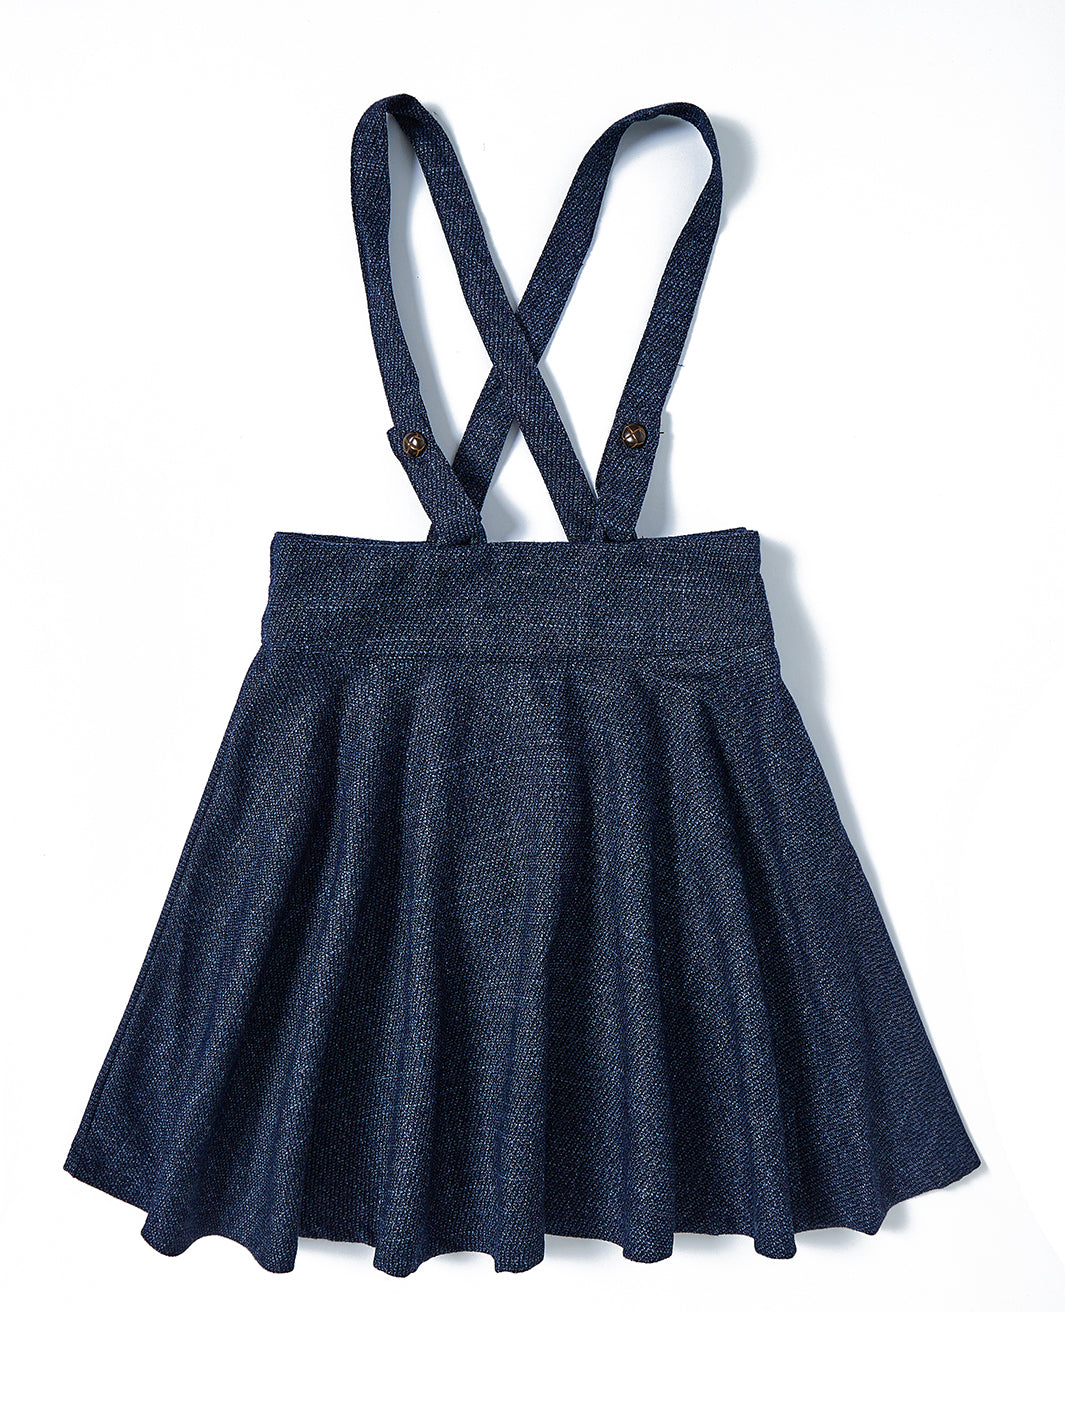 Circle Suspender Skirt- Blue Mix